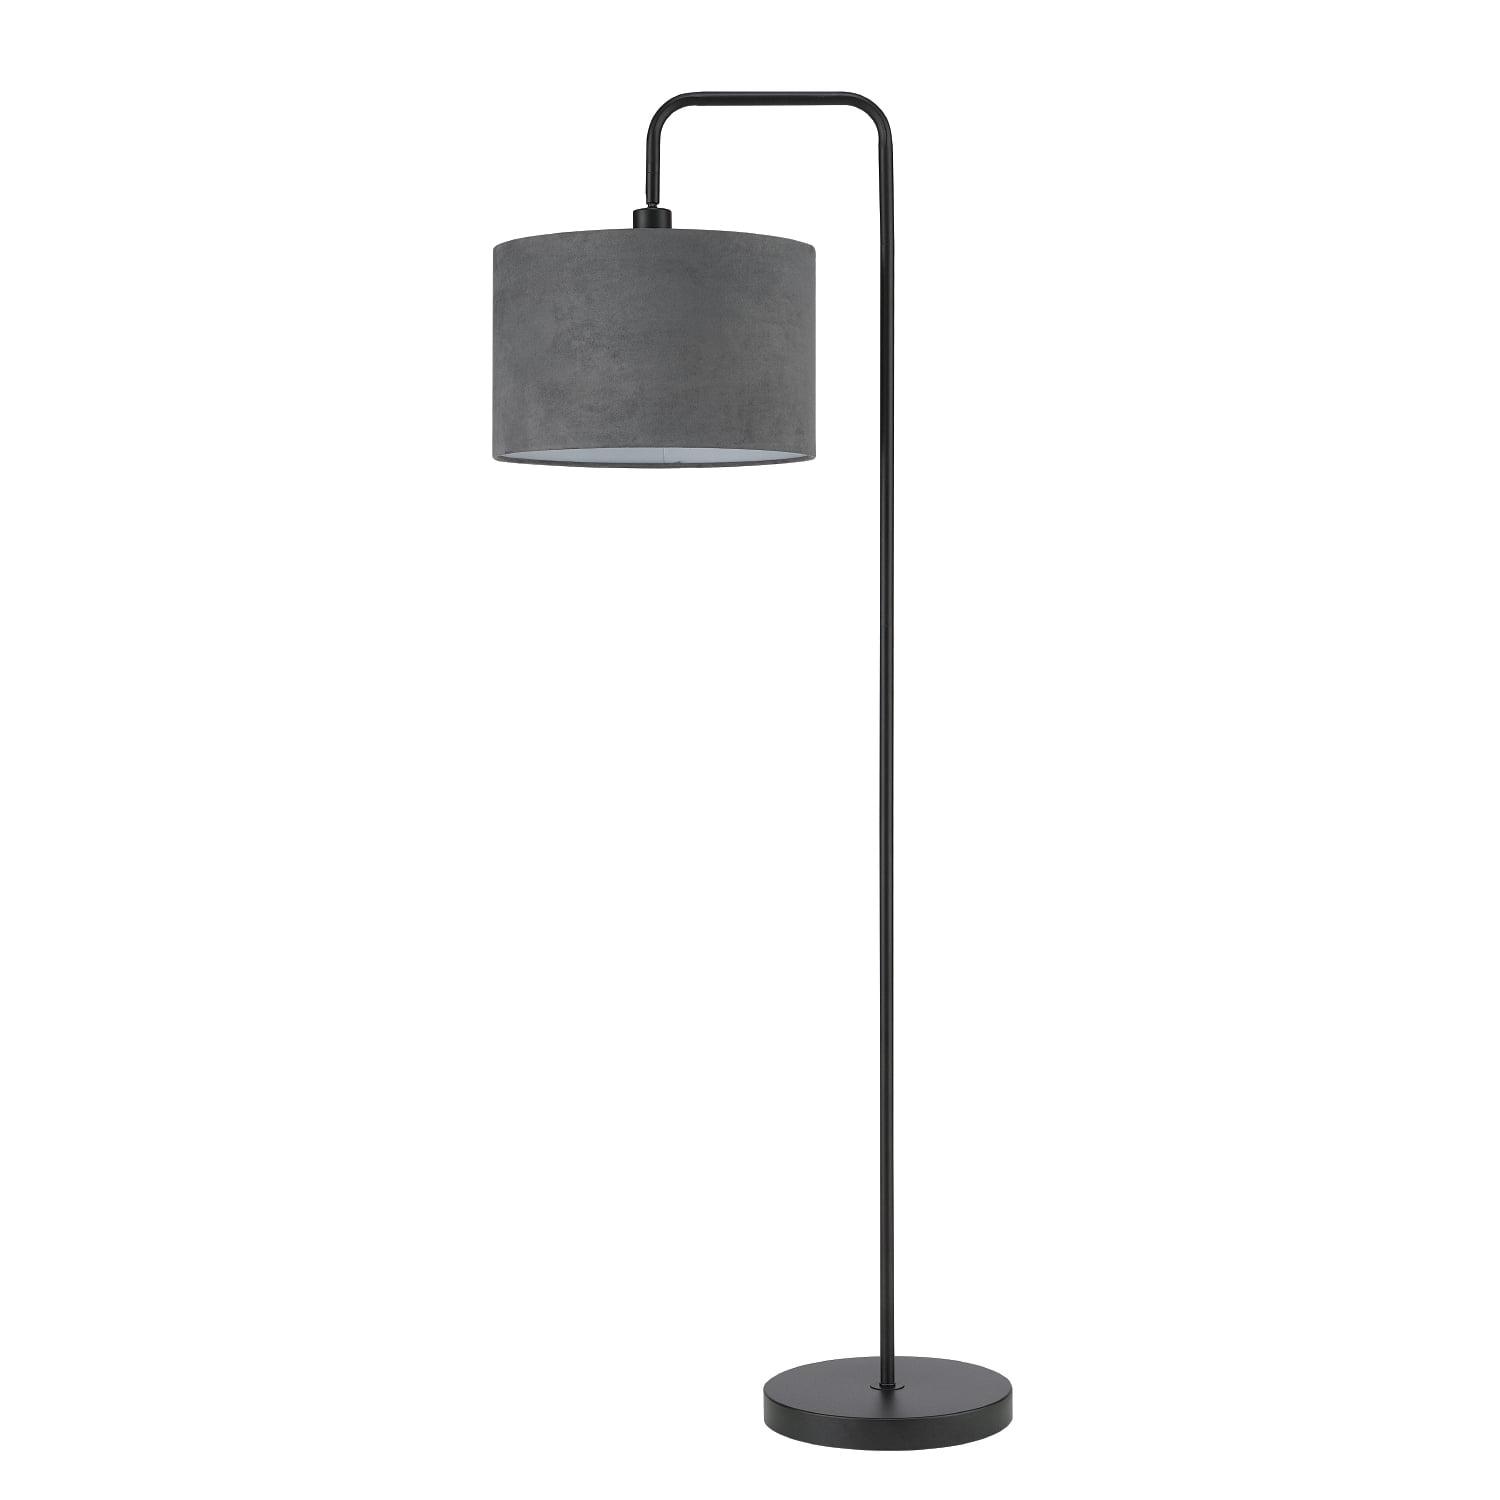 58" Adjustable Black Floor Lamp with Dark Gray Fabric Shade